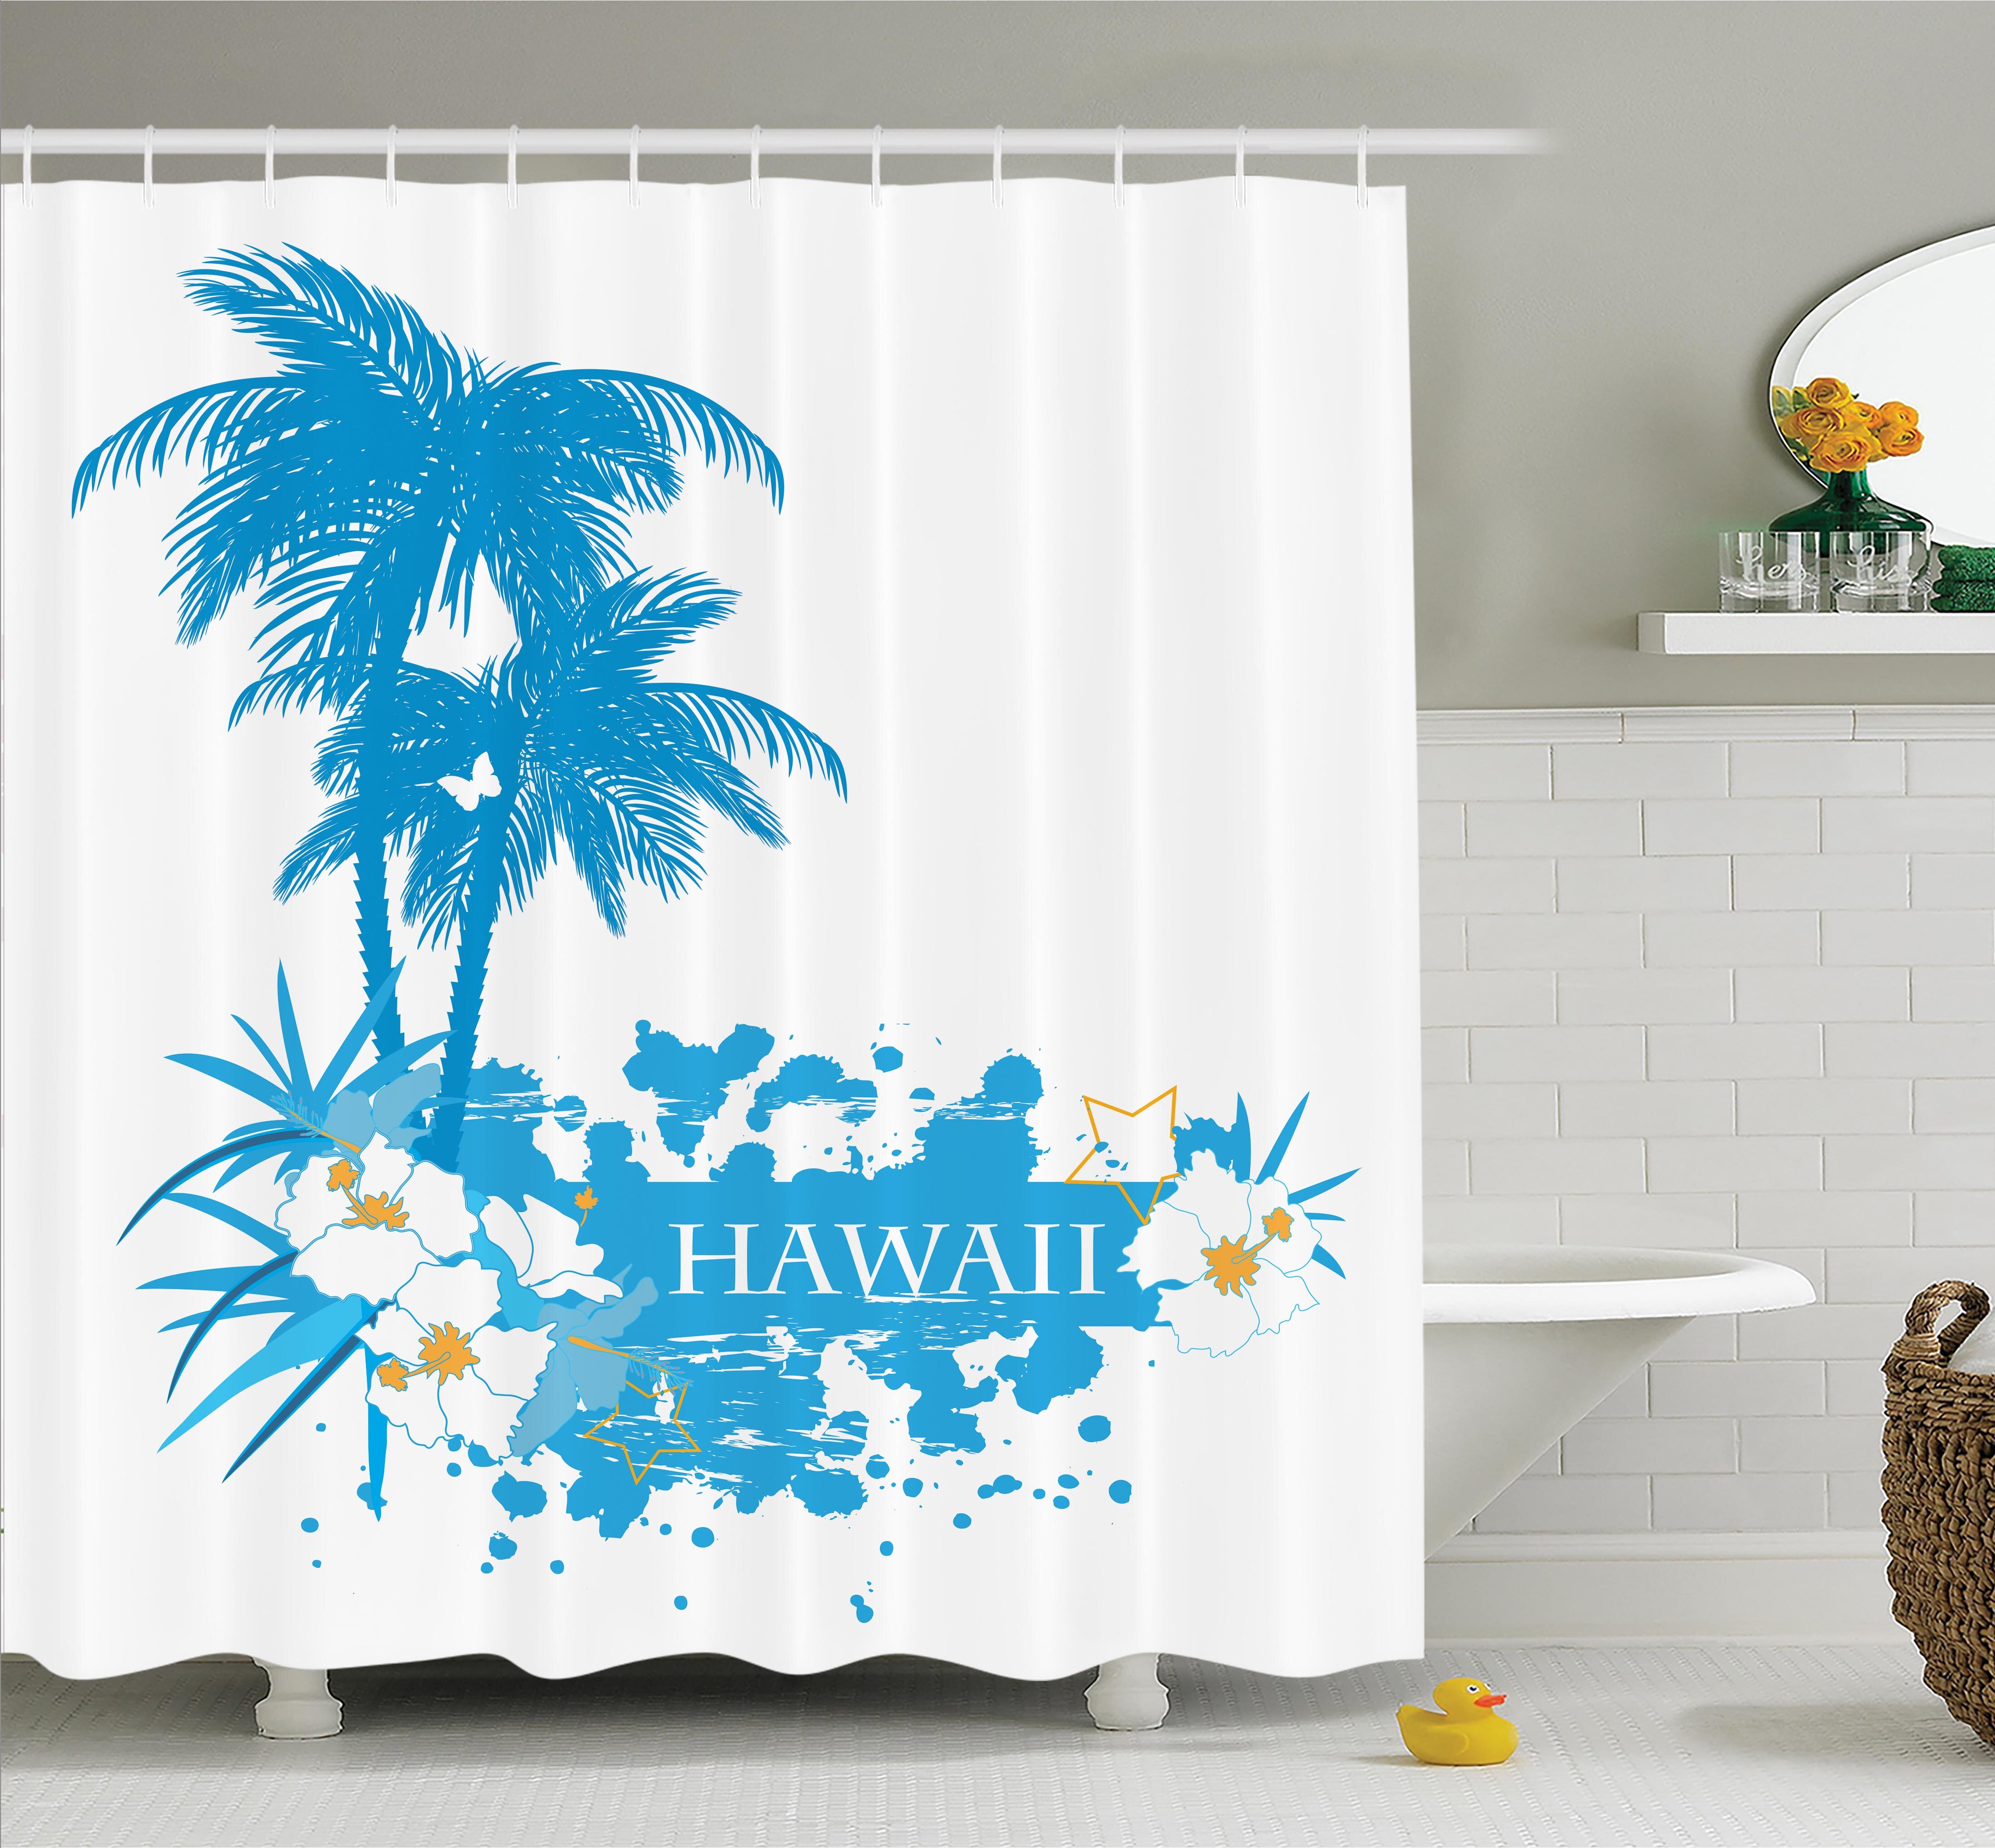 12 Hooks hot Hawaii Island Bathroom Shower Curtain Waterproof Fabric Drapes